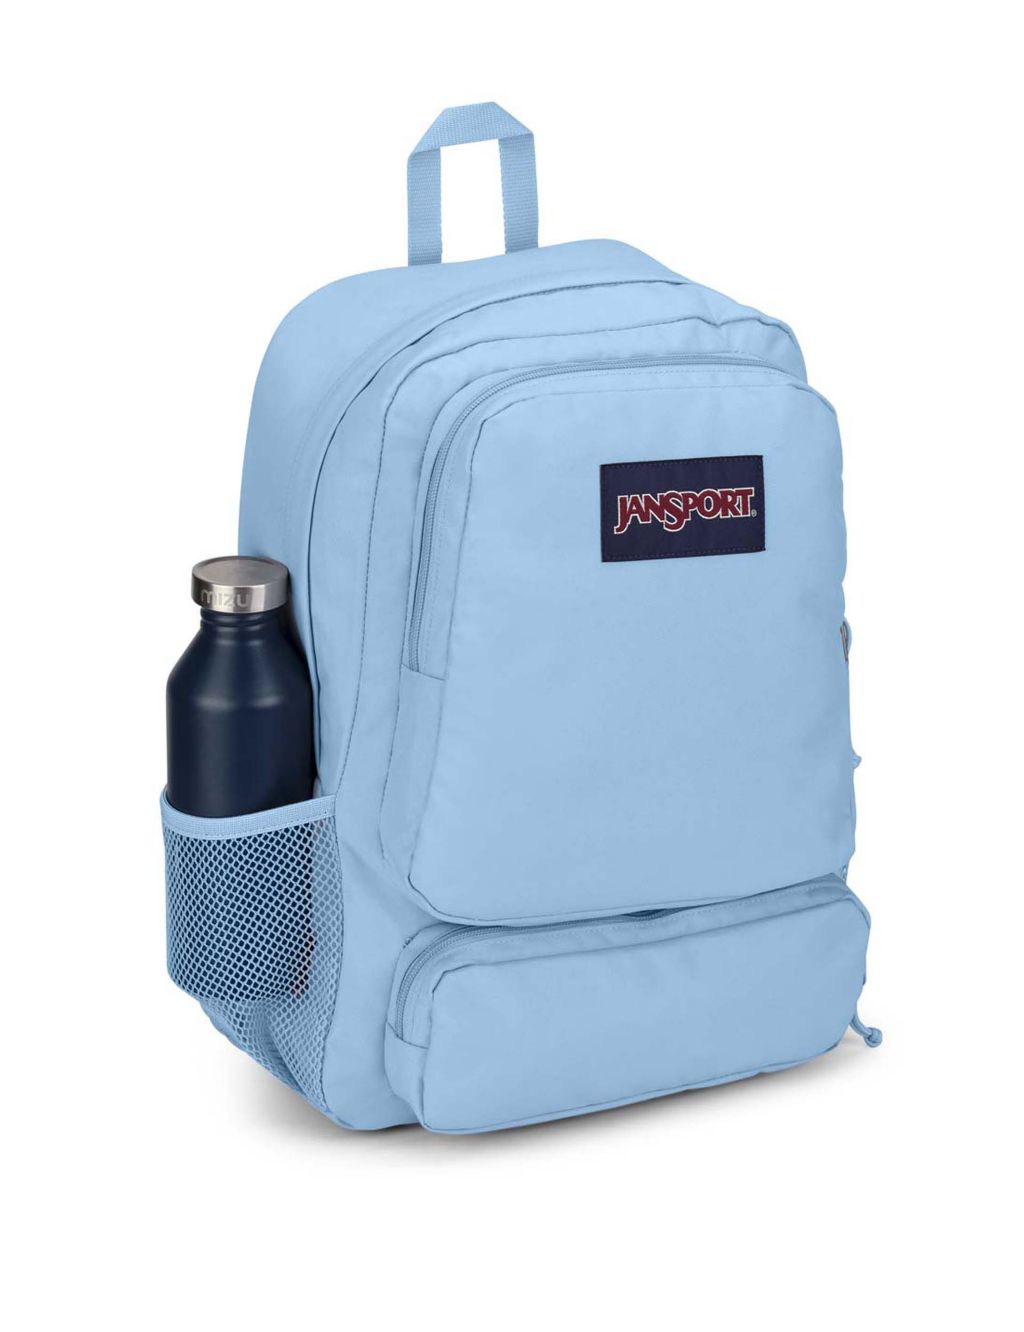 Doubleton Multi Pocket Backpack image 5